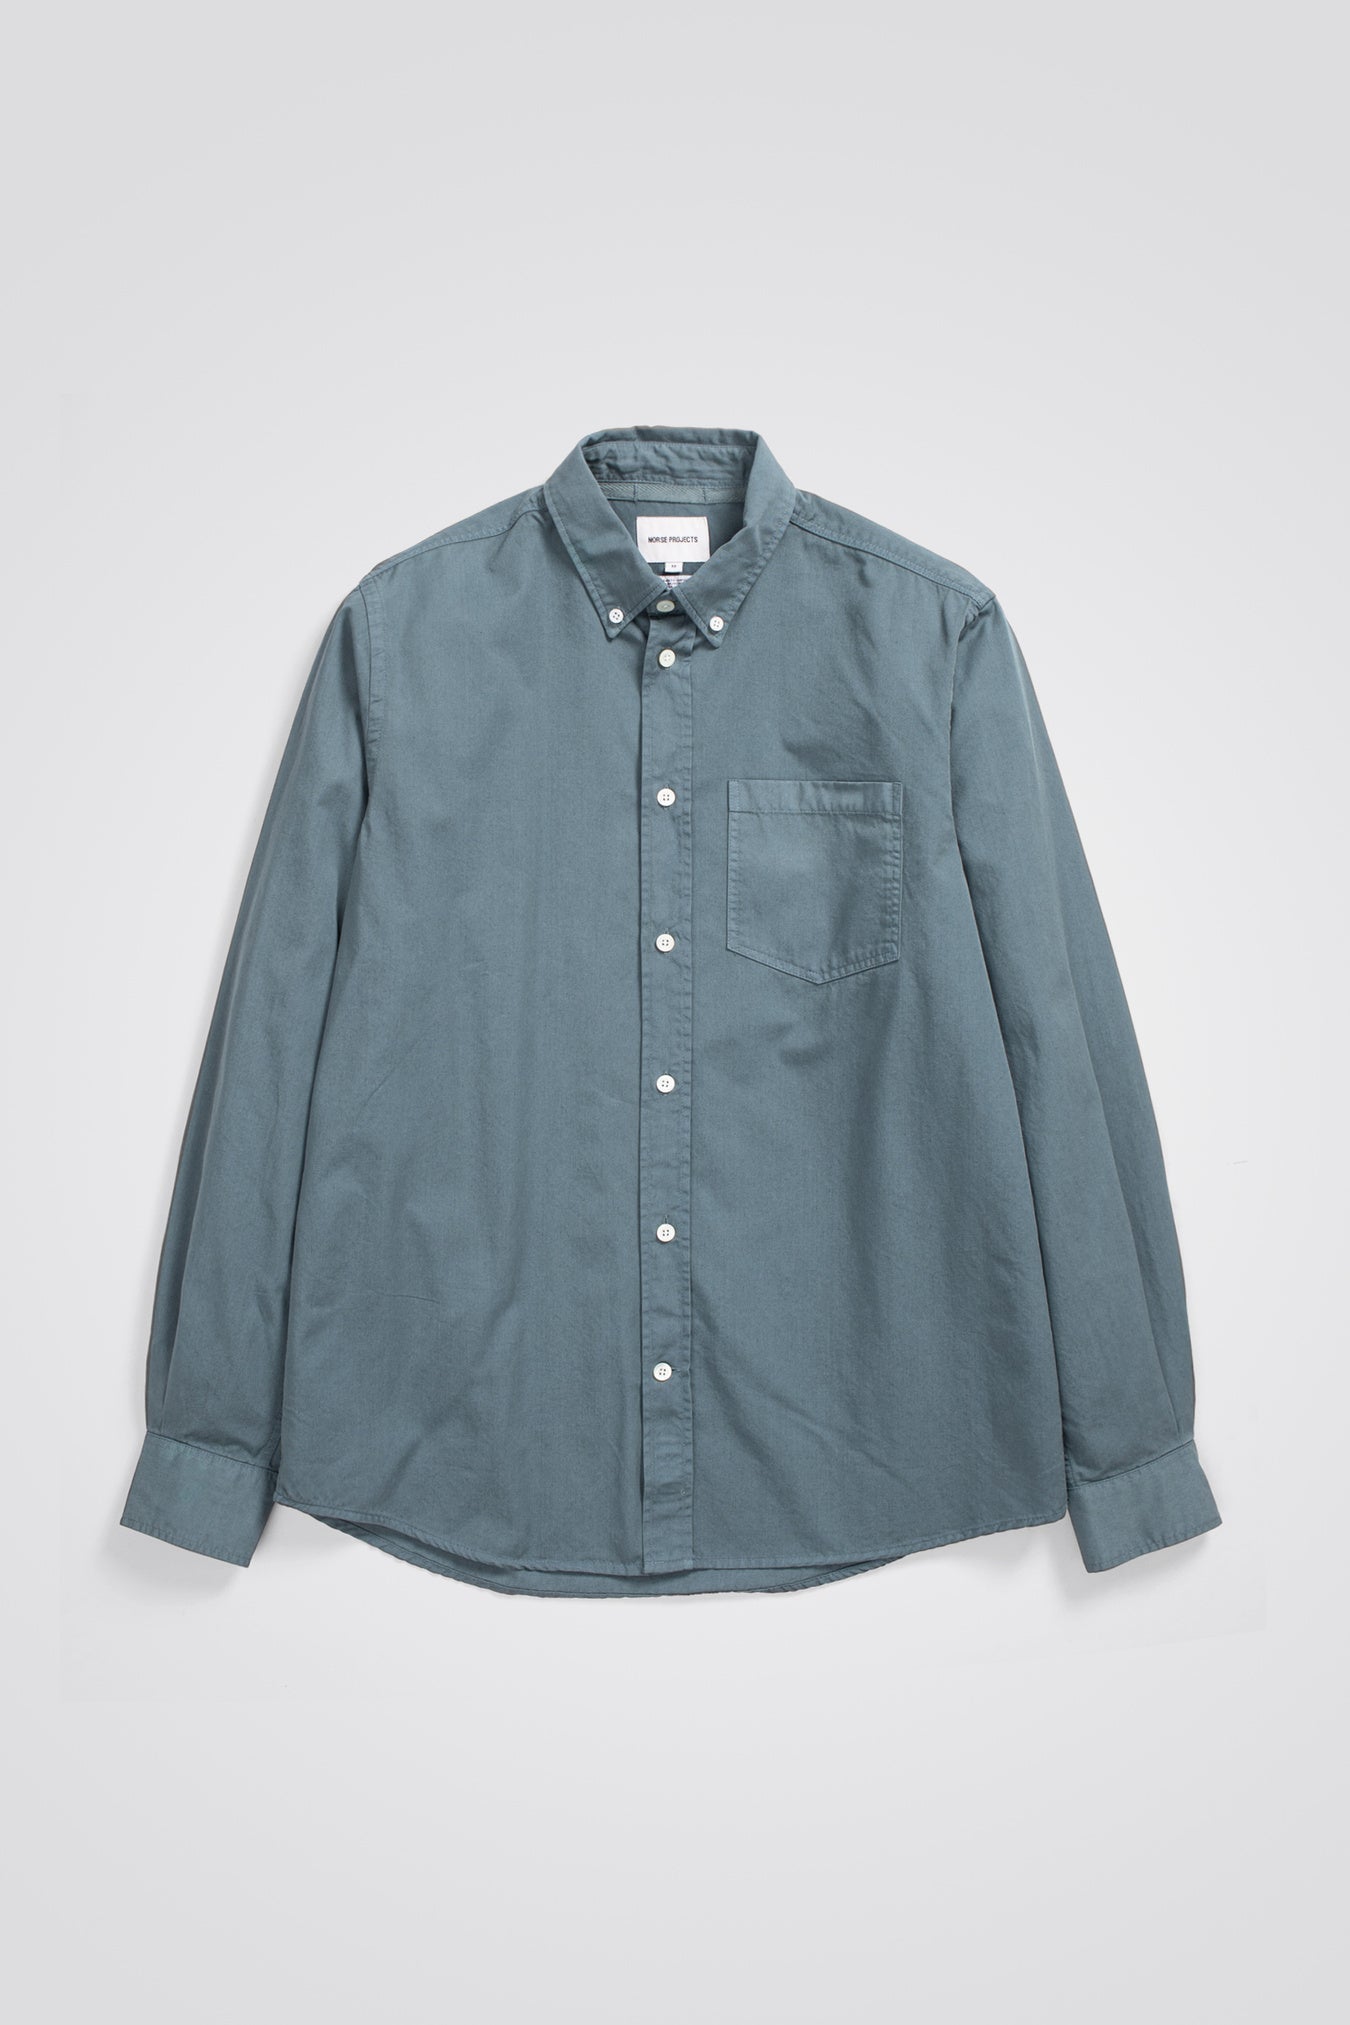 Osvald Cotton Tencel Shirt - Norse Projects - Danali - N40-0618-LightStoneBlue-M